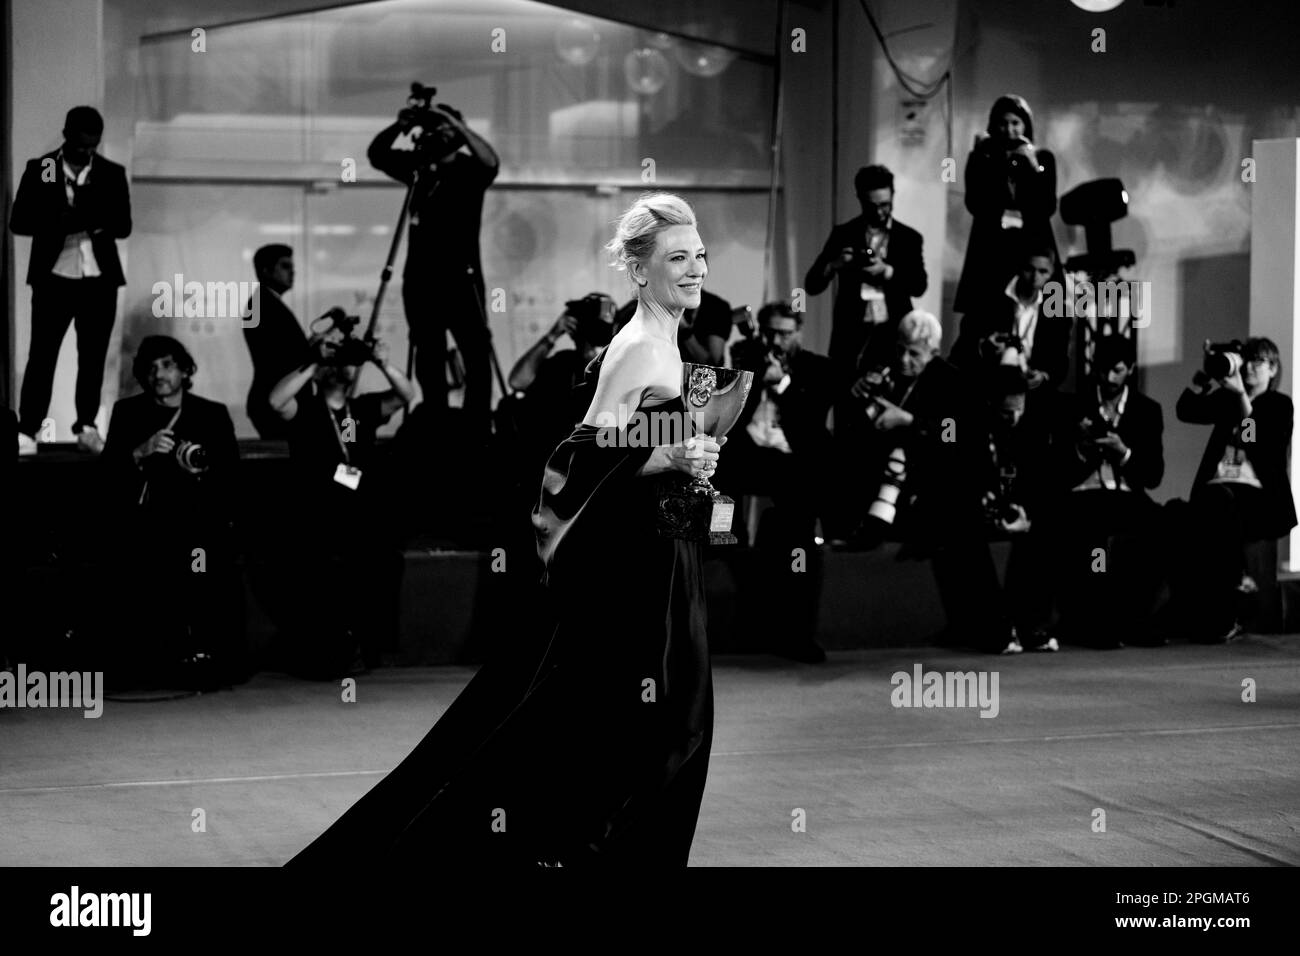 Venice, Italy, 10th September 2022, Cate Blanchett attends the Venice Film Festival 2022 (Photo credits: Giovanna Onofri) Stock Photo